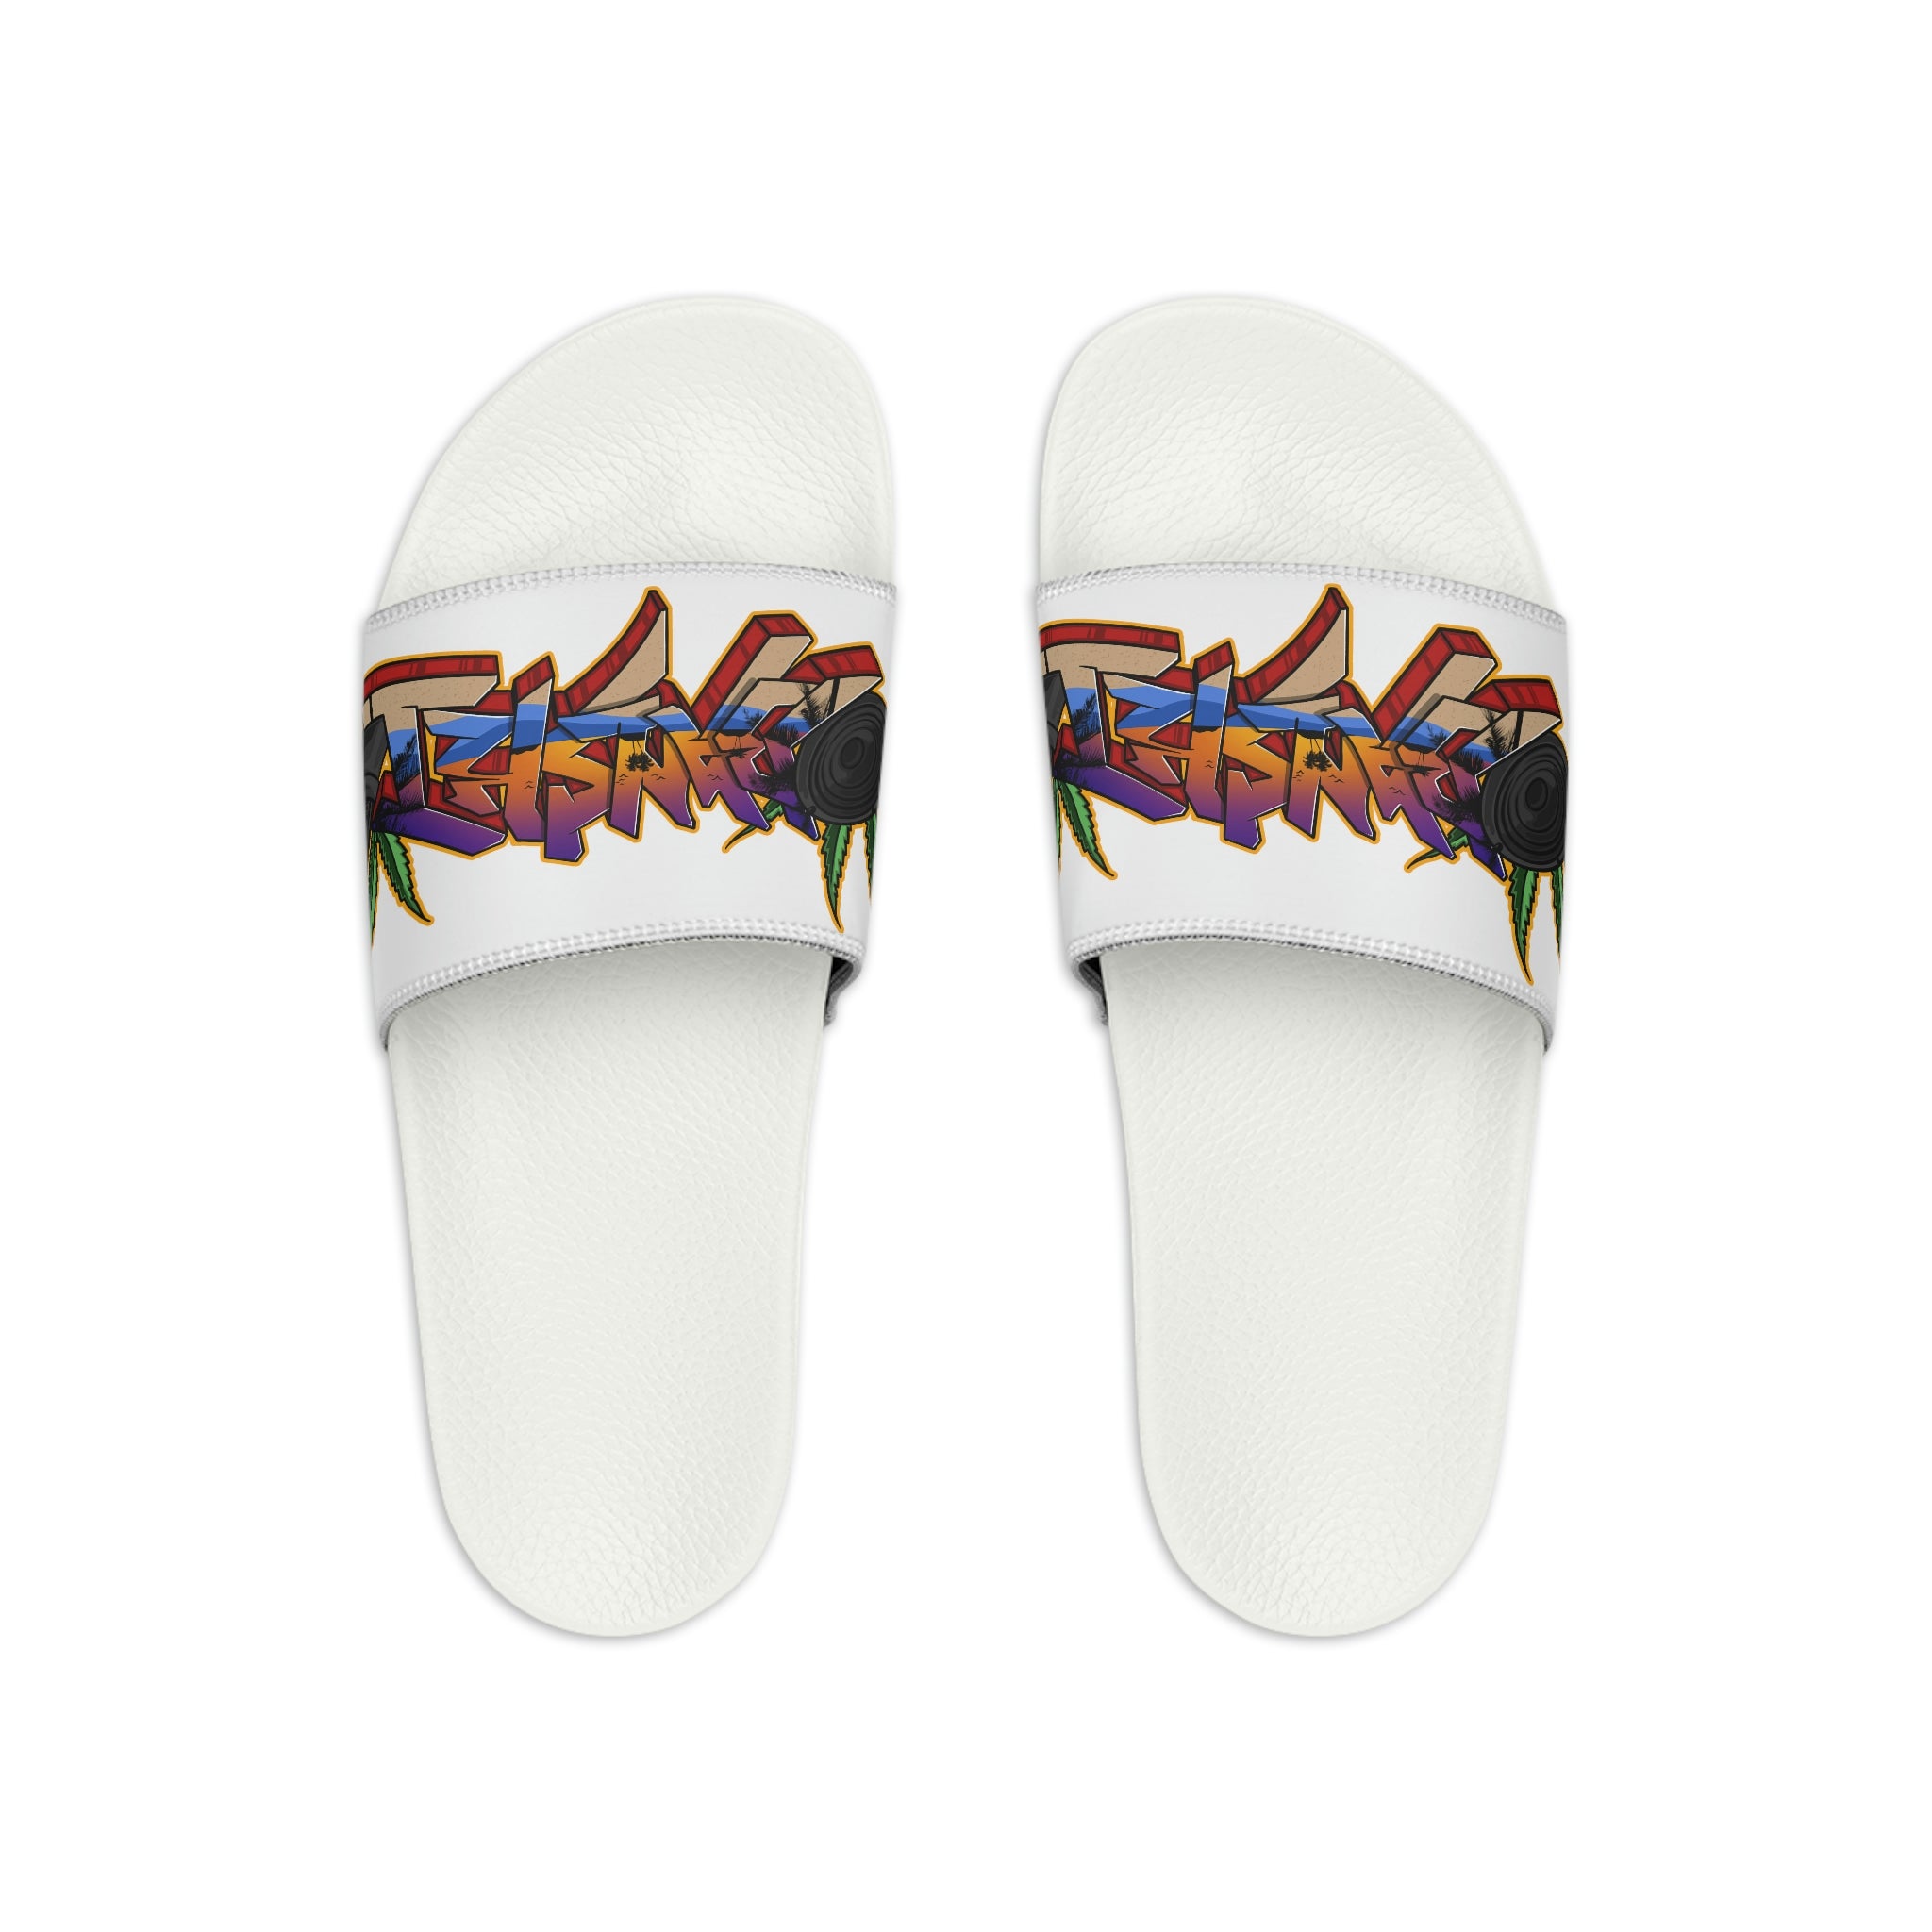 Banski - Men's Slide Sandals